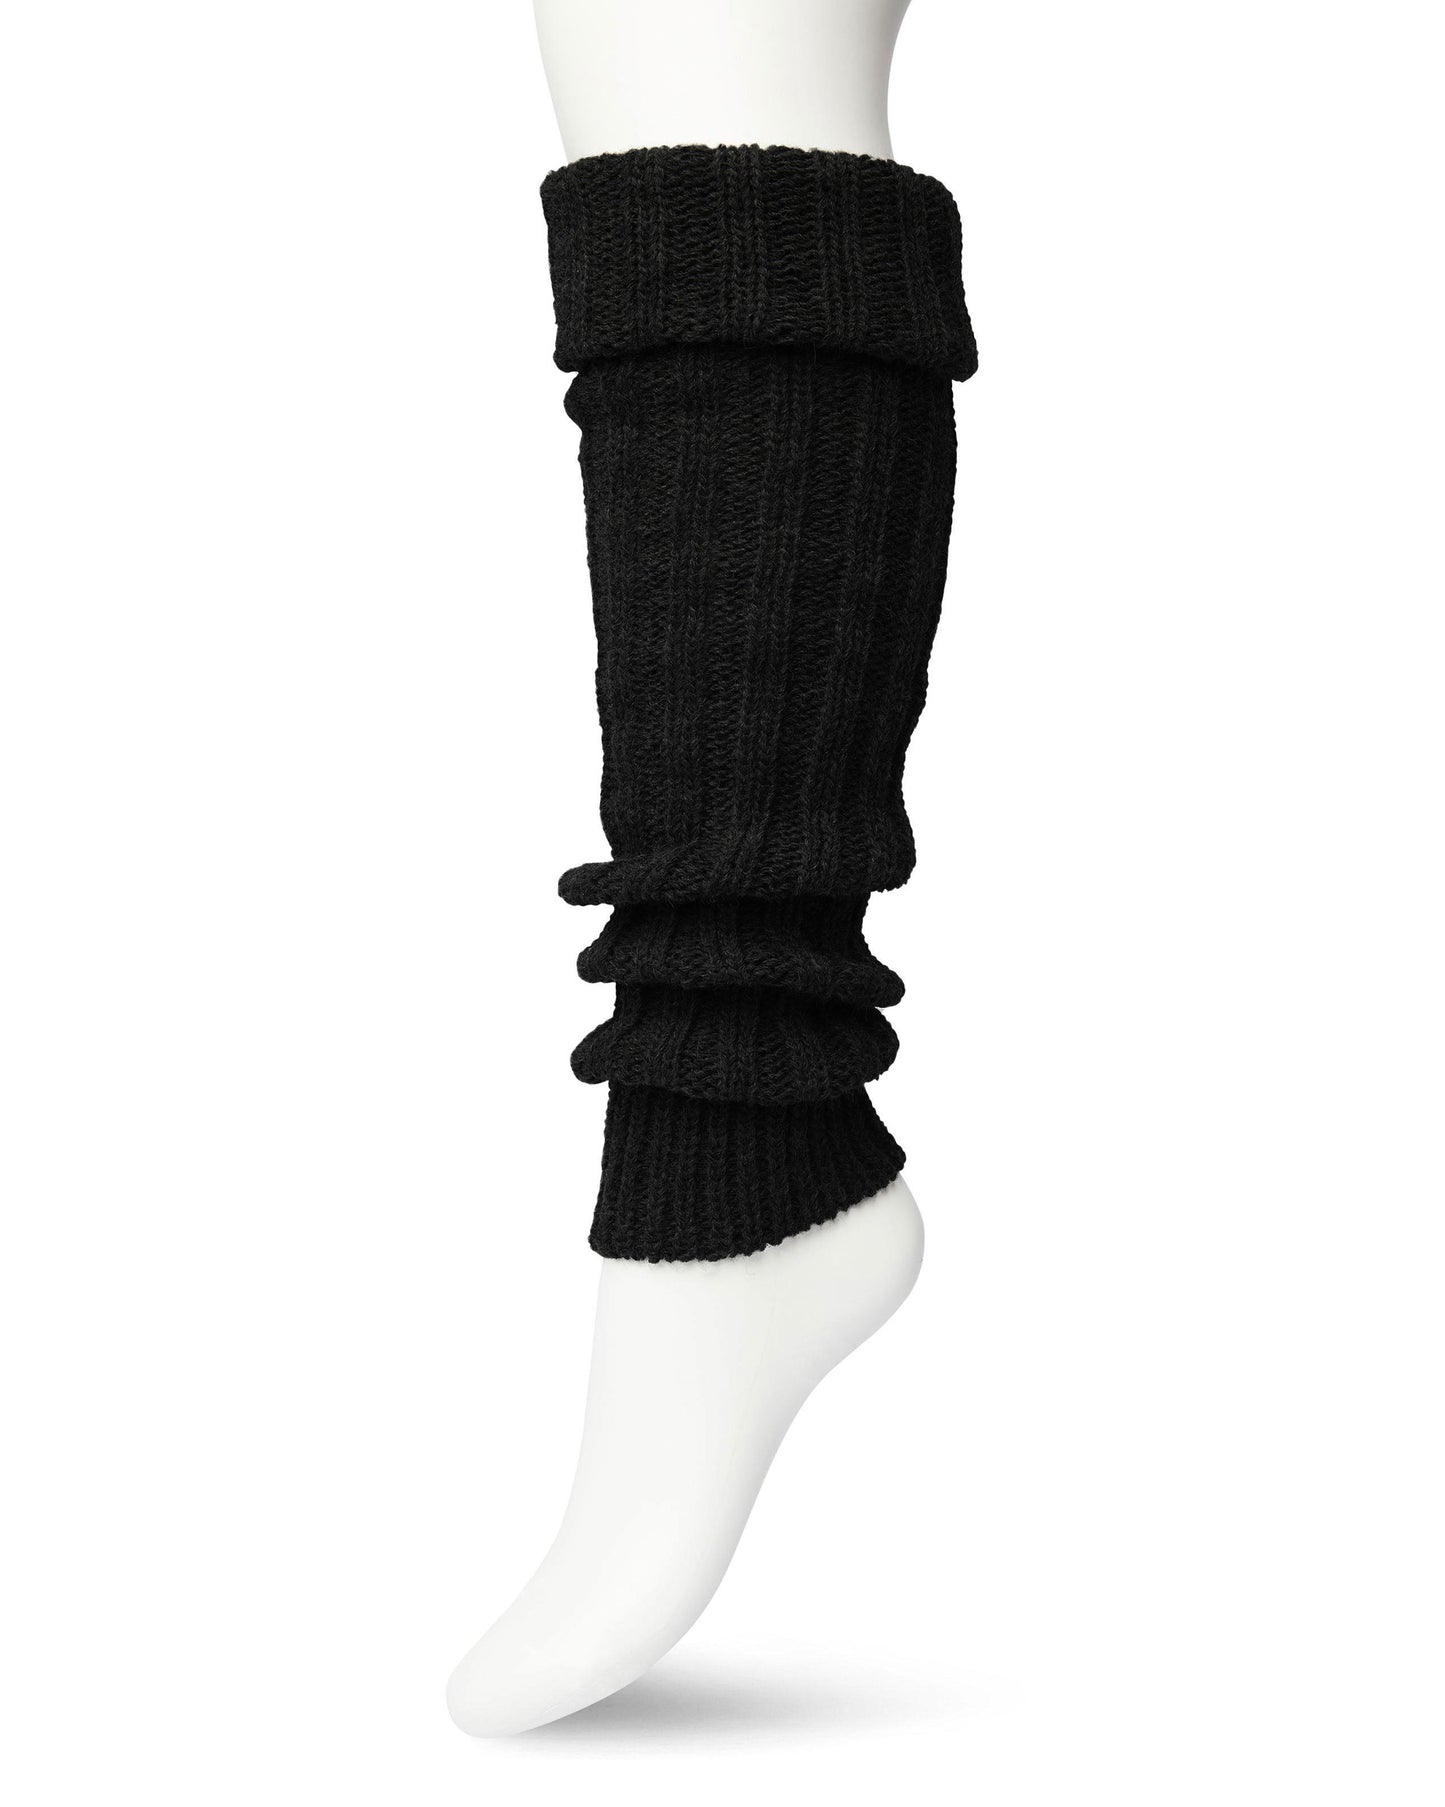 Bonnie Doon Sleever/Legwarmer BE021766 - black wool mix chunky knitted leg warmers